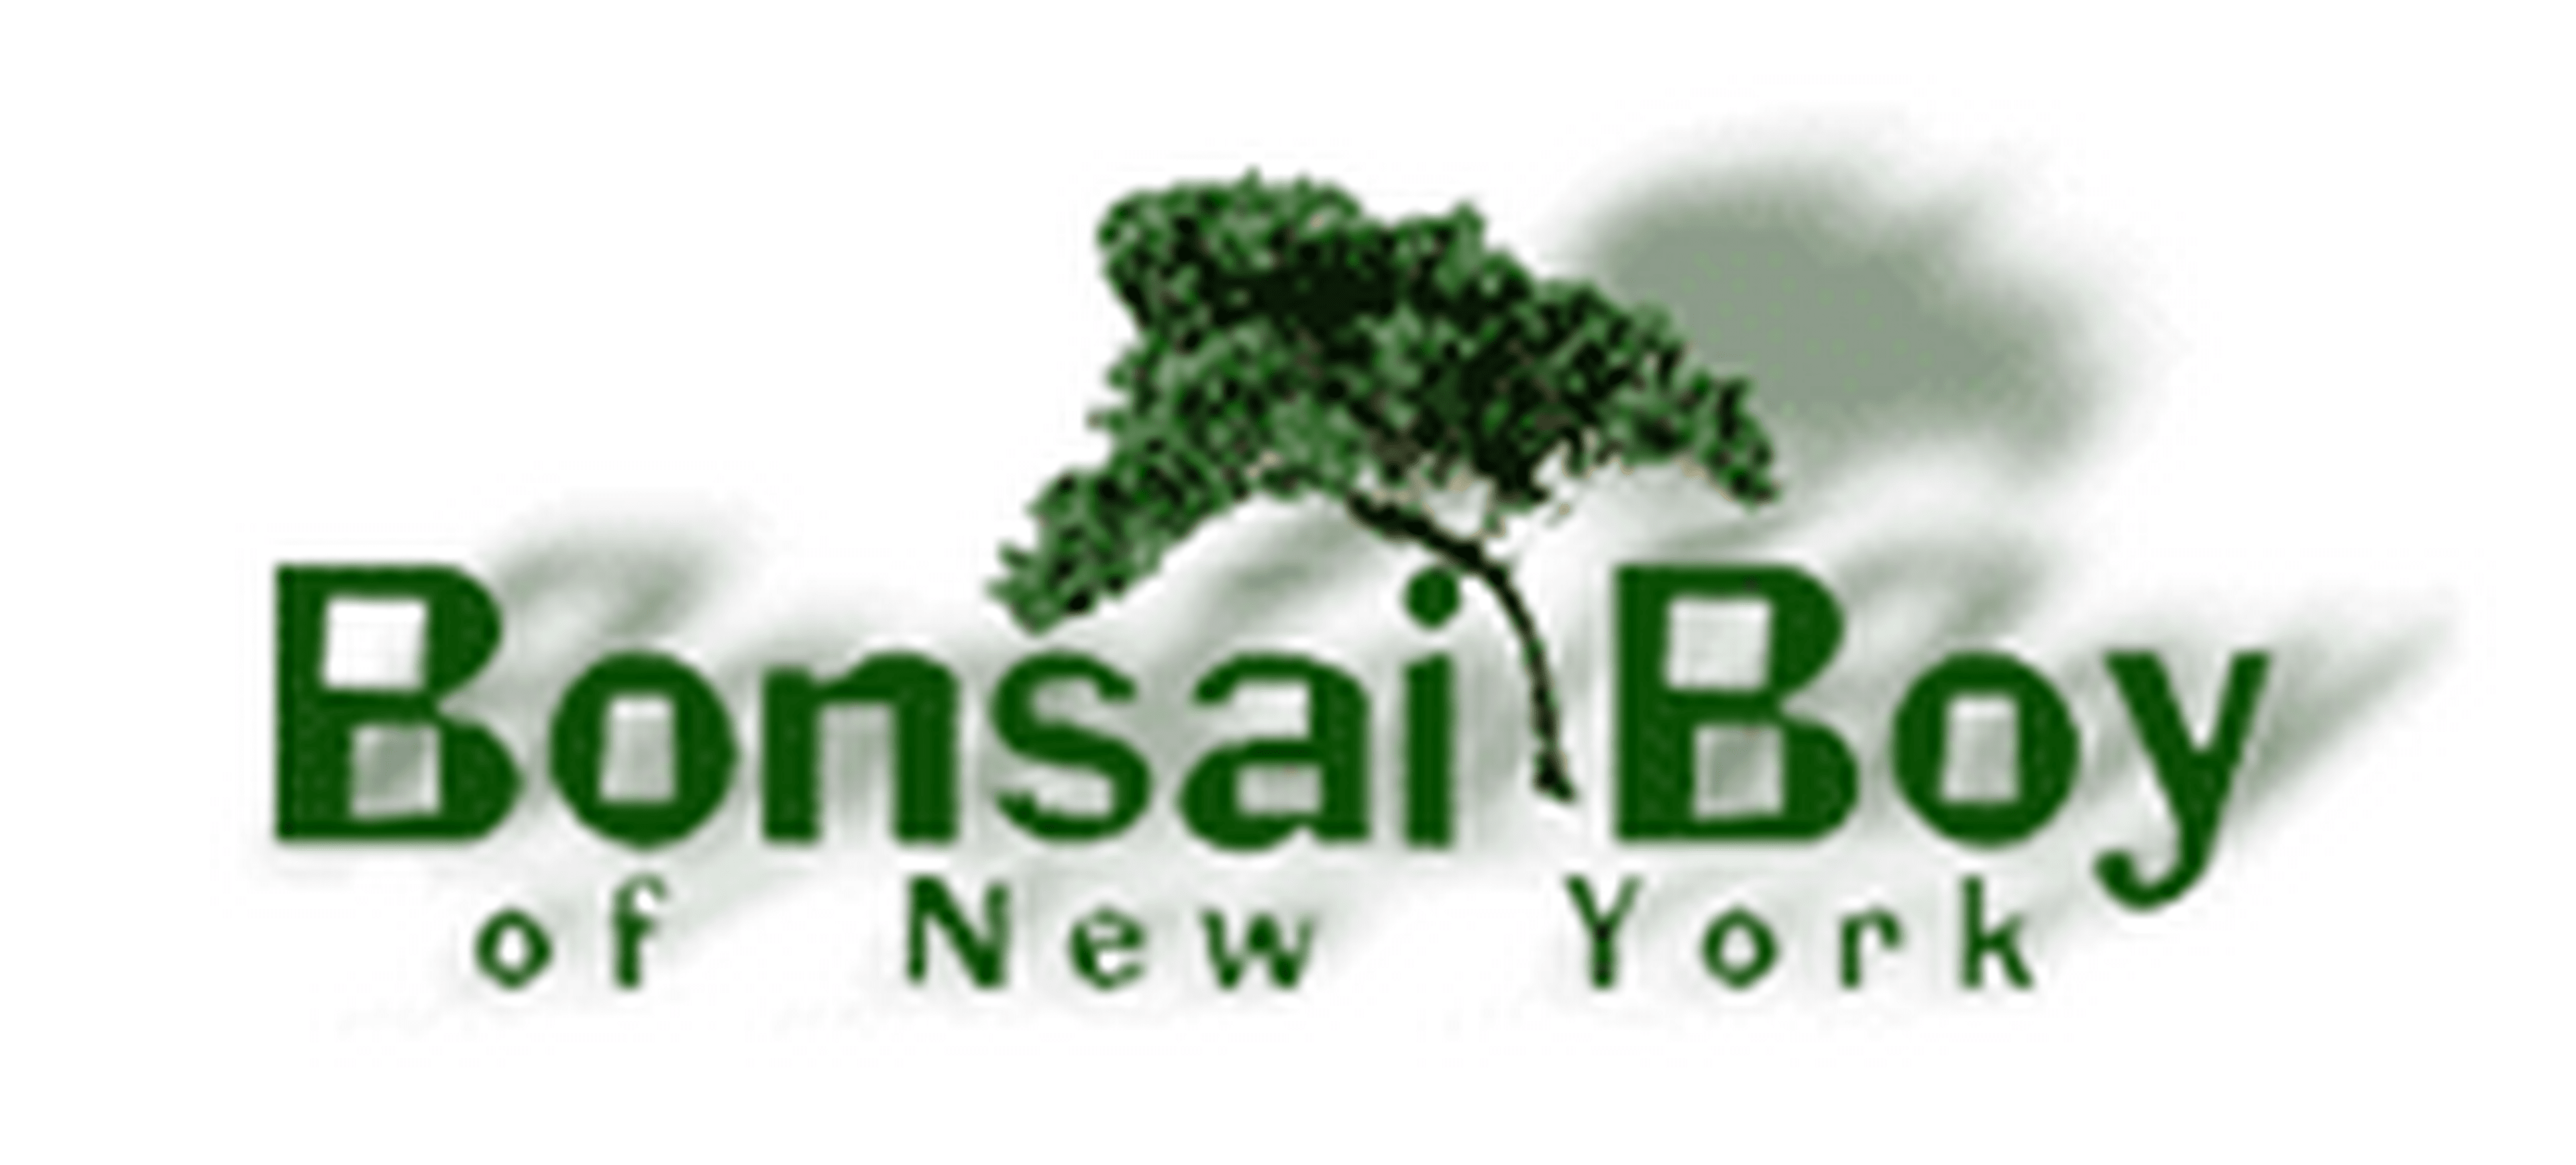 Bonsai Boy of New York Code